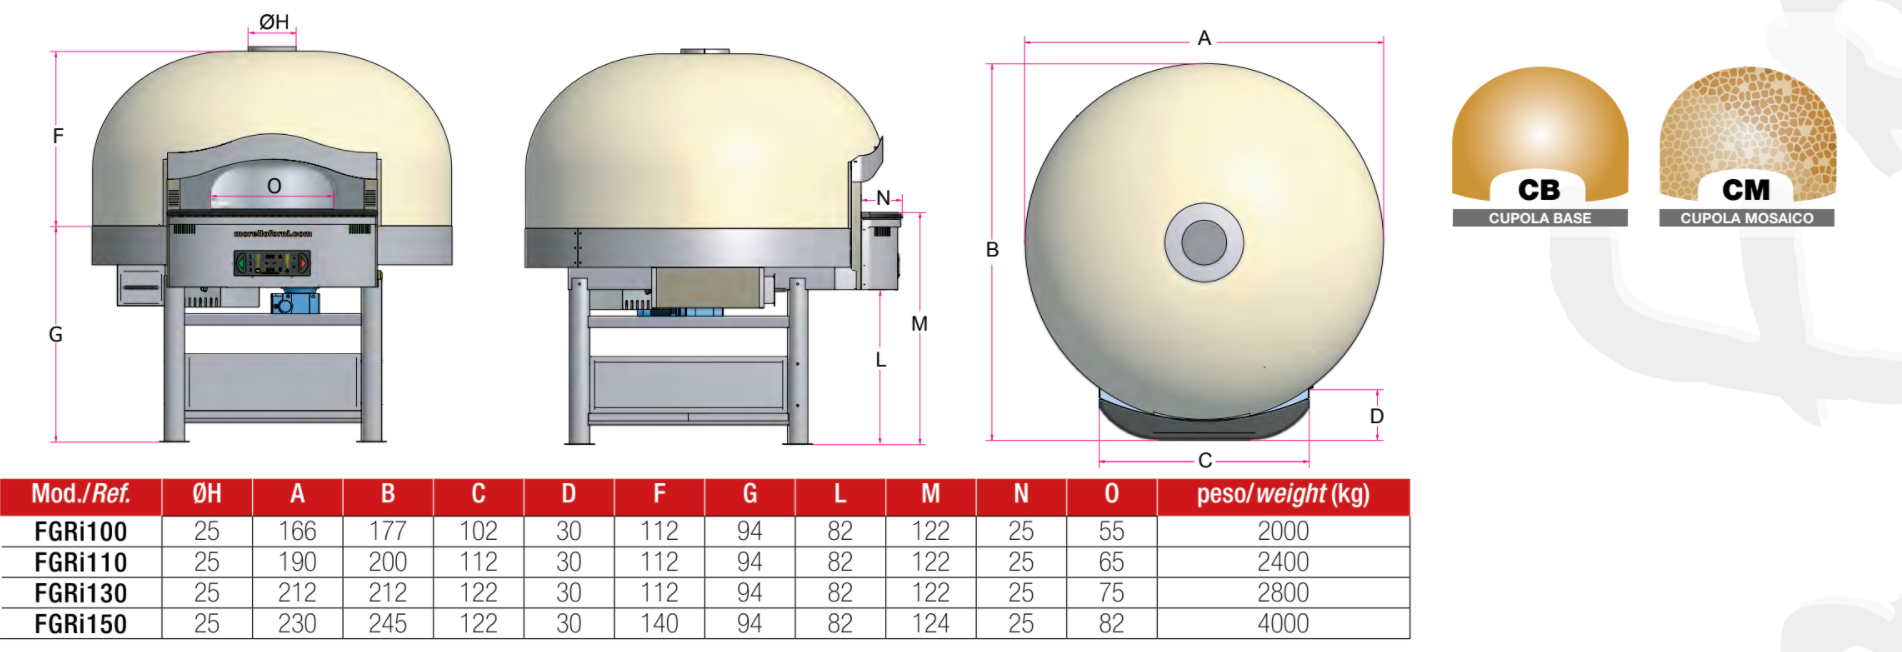 MORELLO FORNI FRV Electric Dome Pizza Oven - Rotating Oven Floor